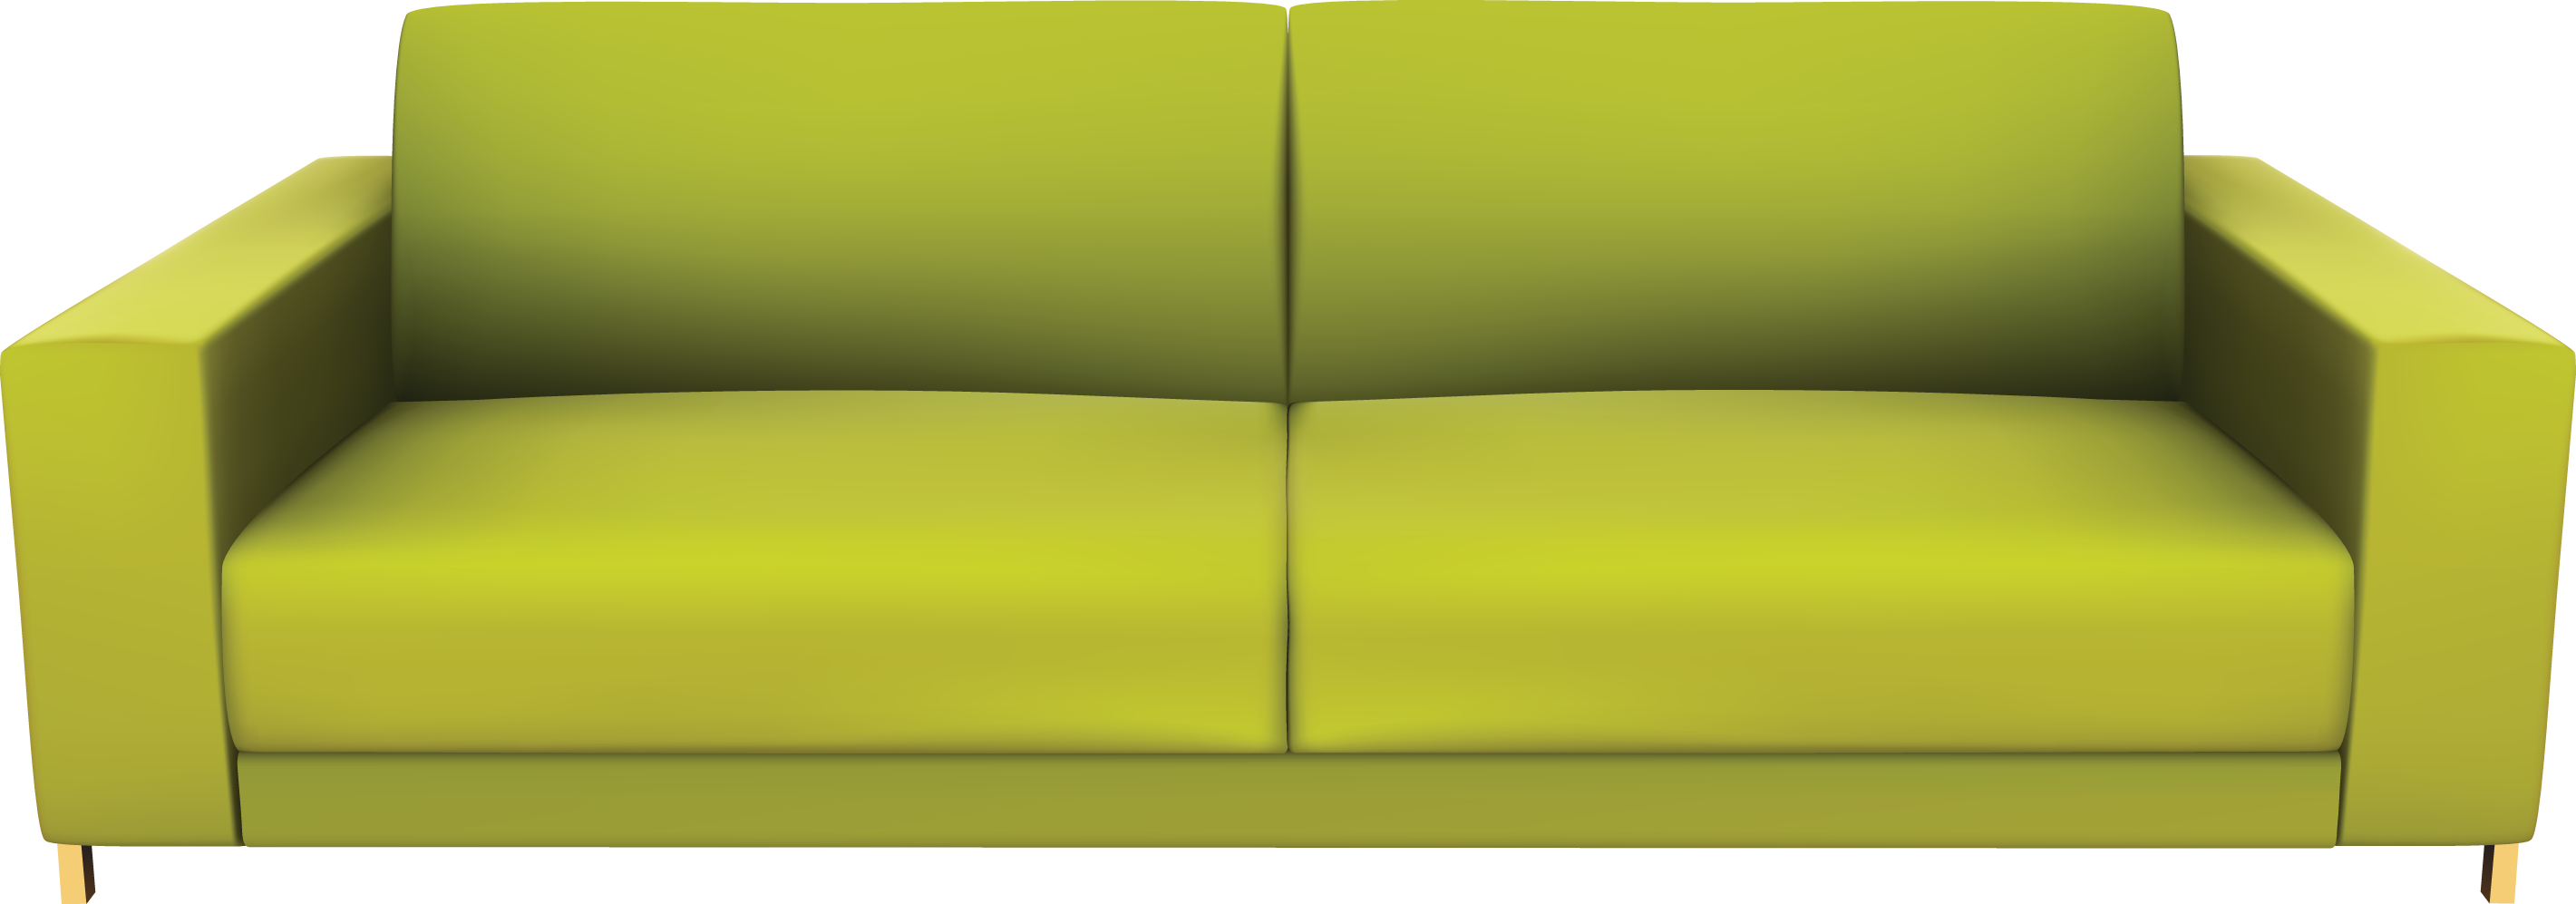 Modern Sofa Download PNG Image